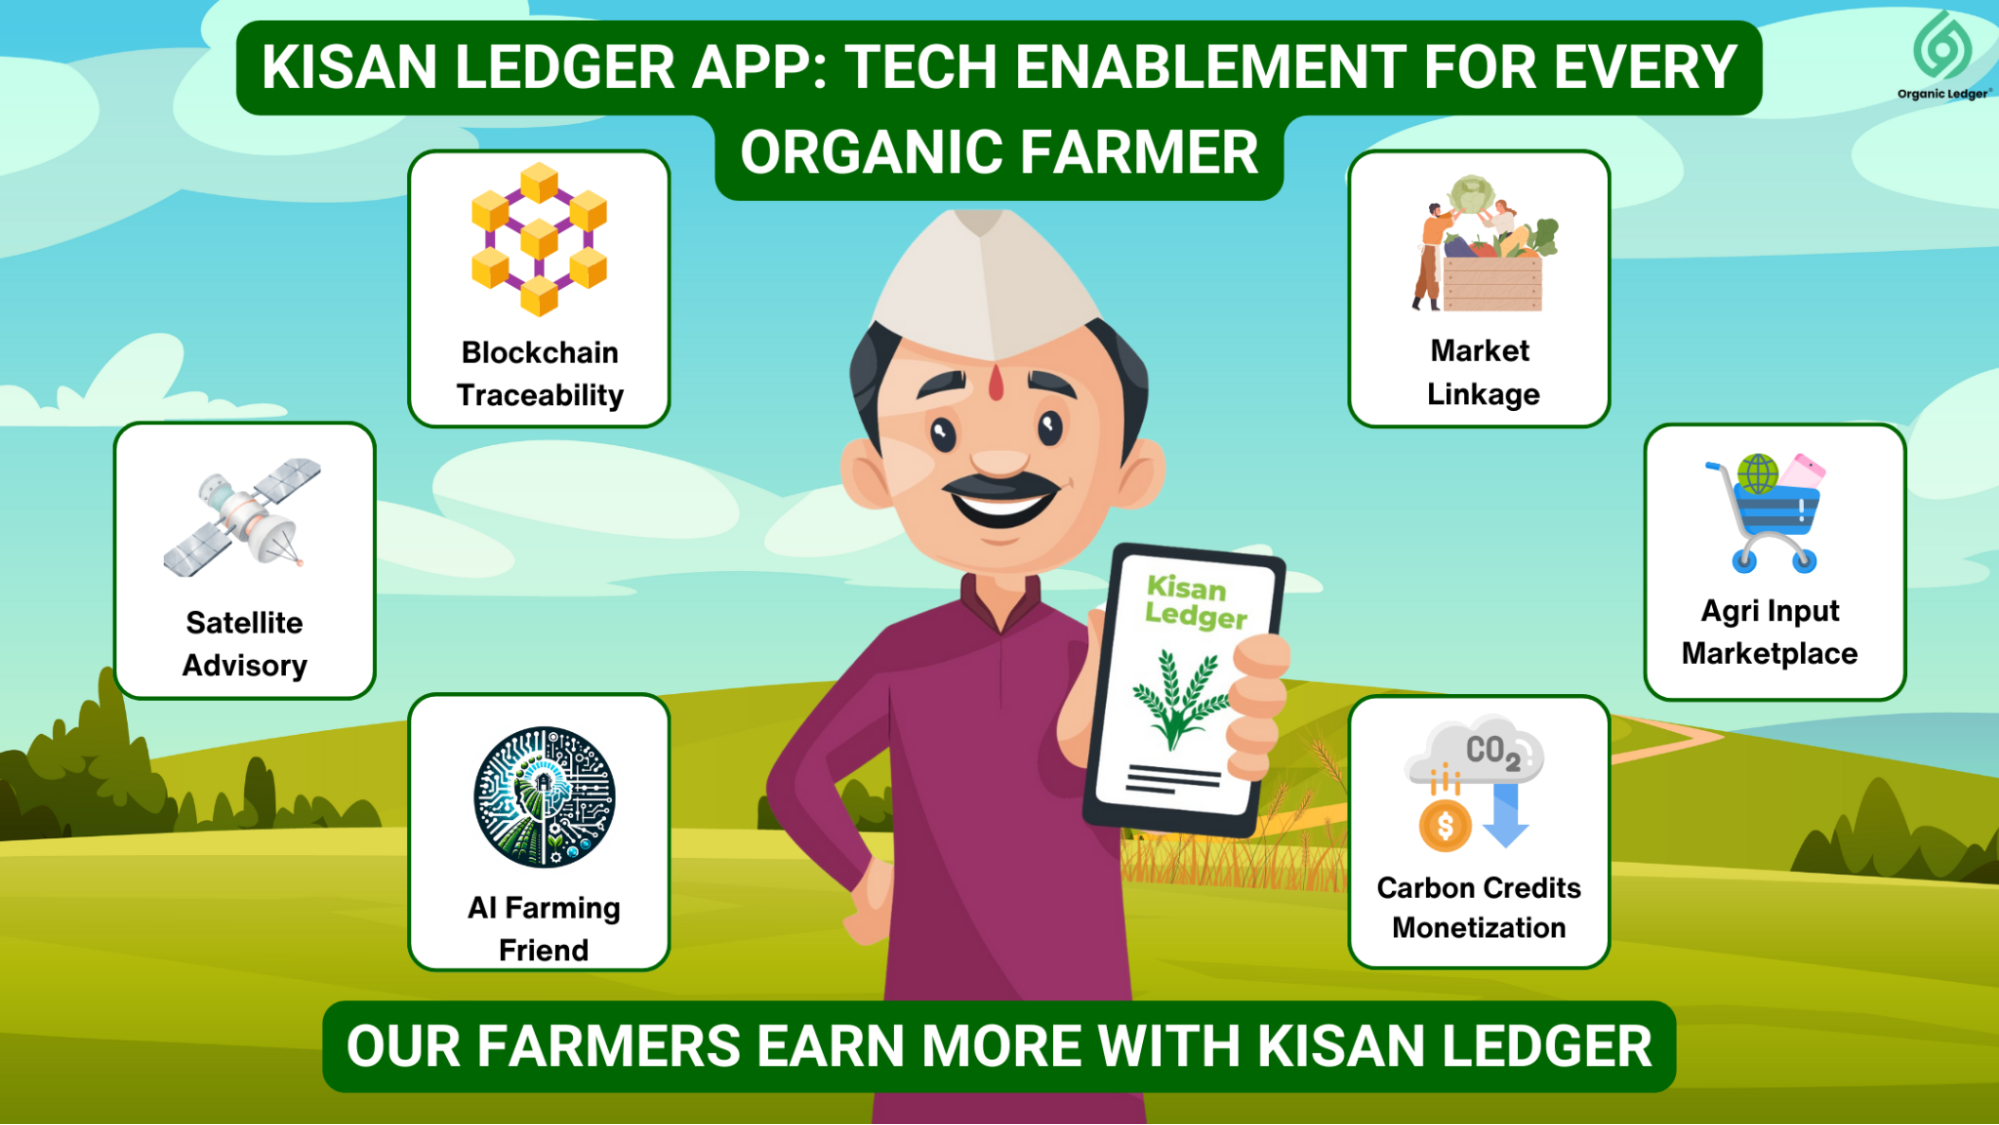 Kisan Ledger App: Tech enablement for every organic farmer